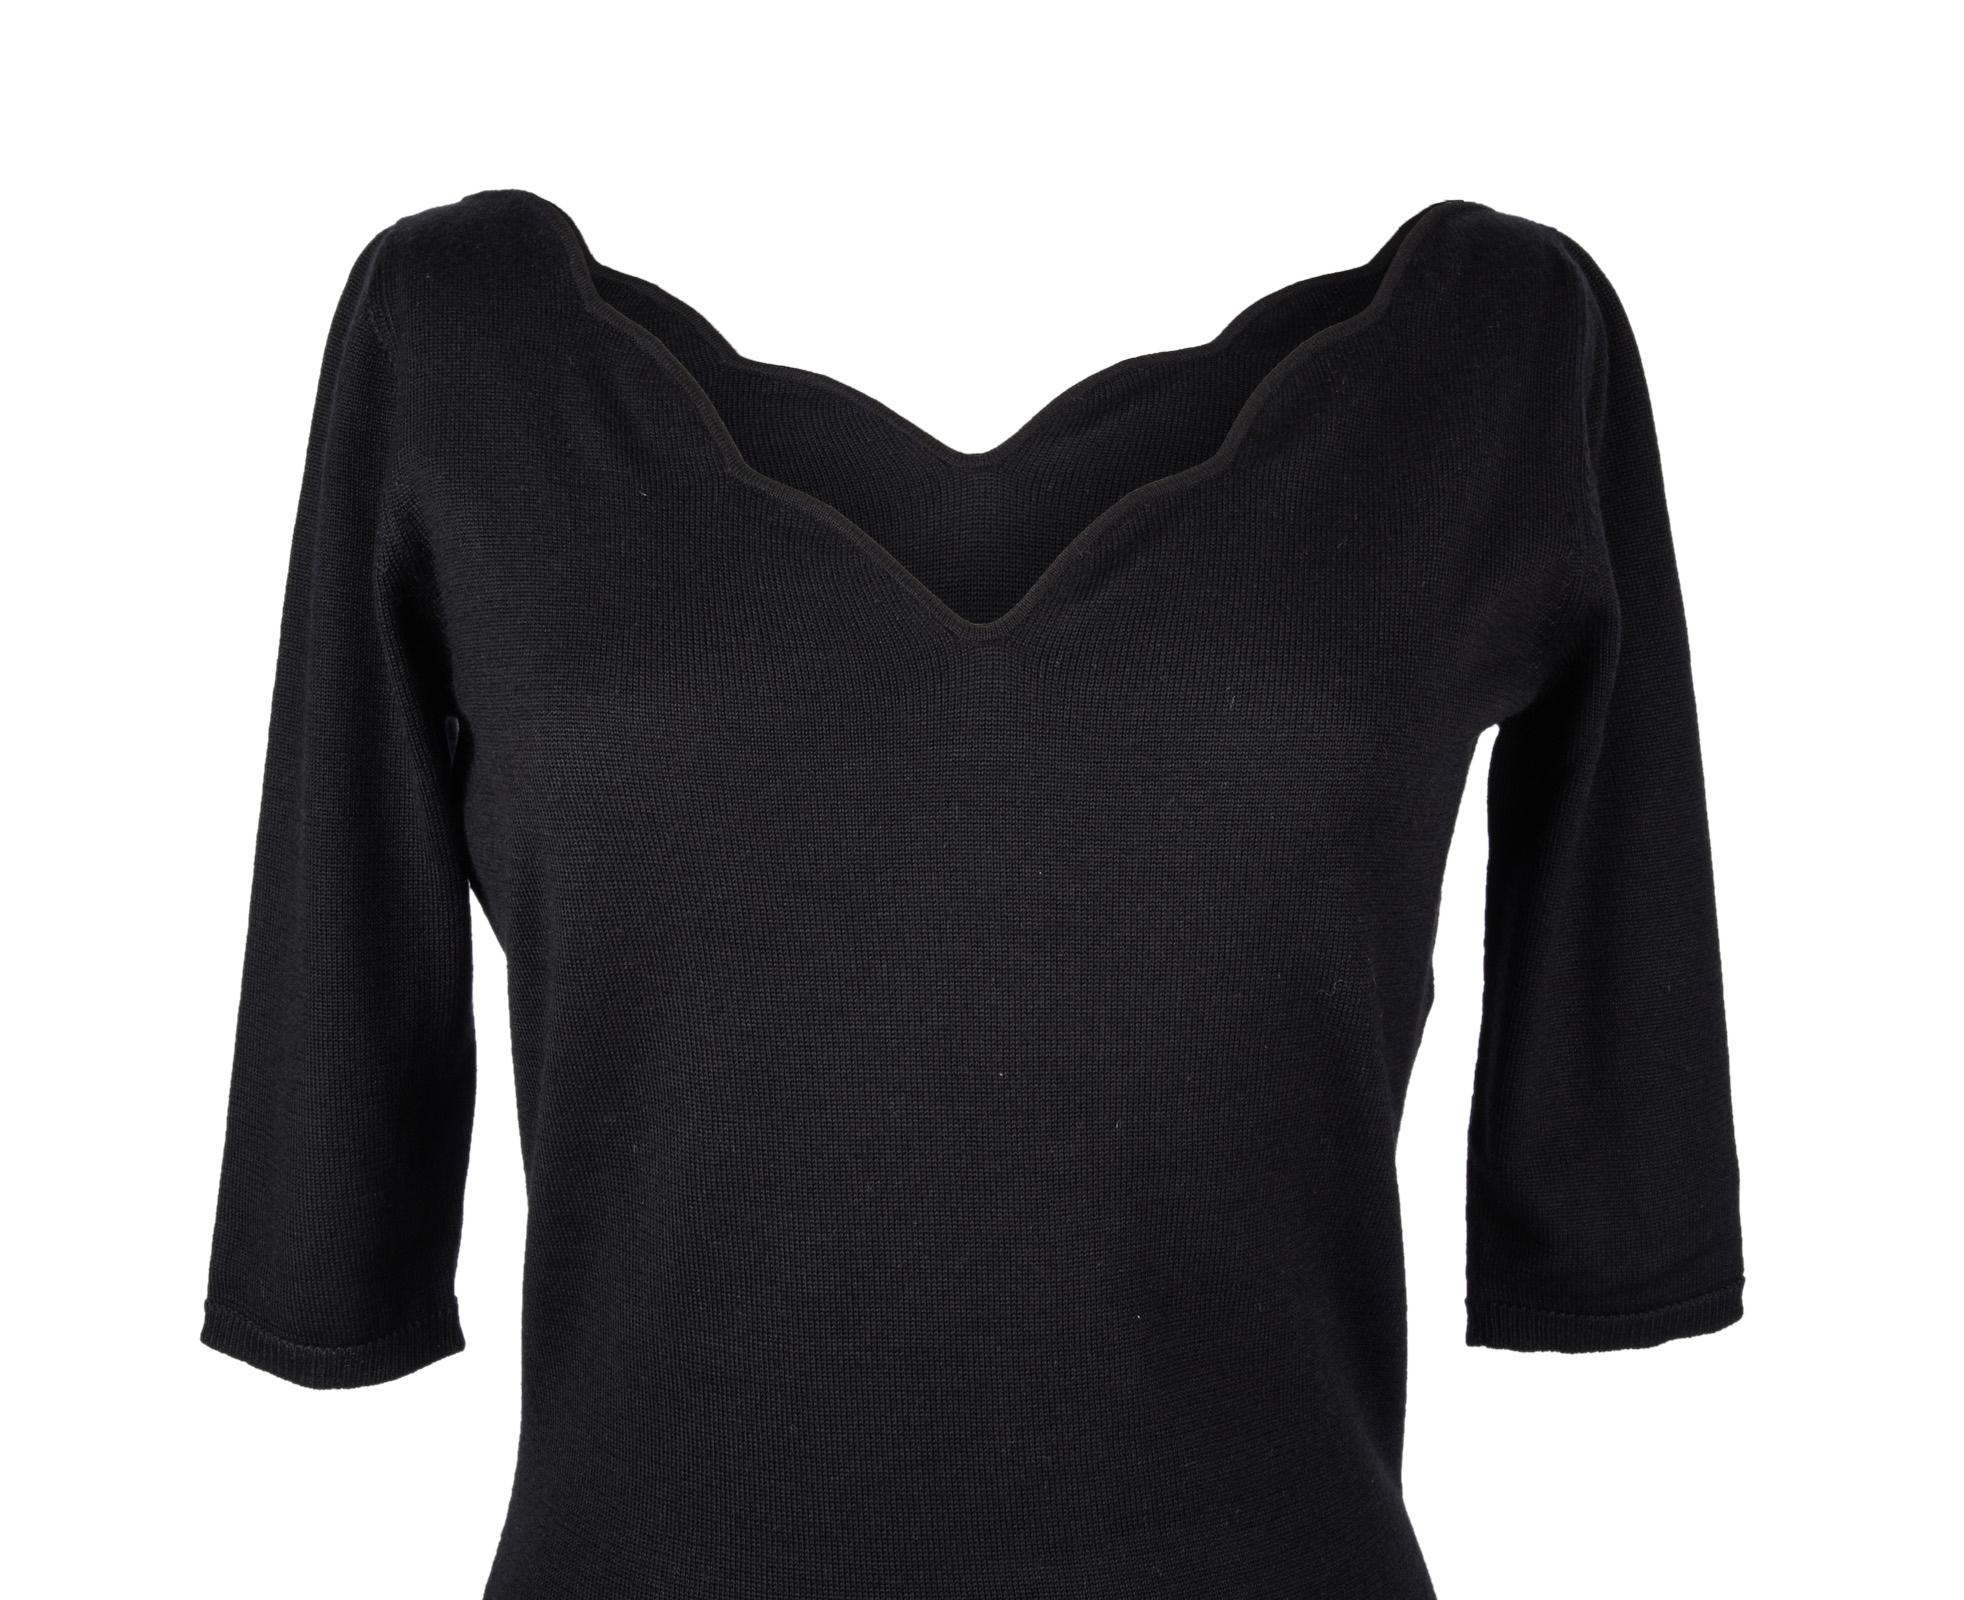 Christian Dior Top Black Cashmere Pullover Scallop Neckline 3/4 Sleeve 1